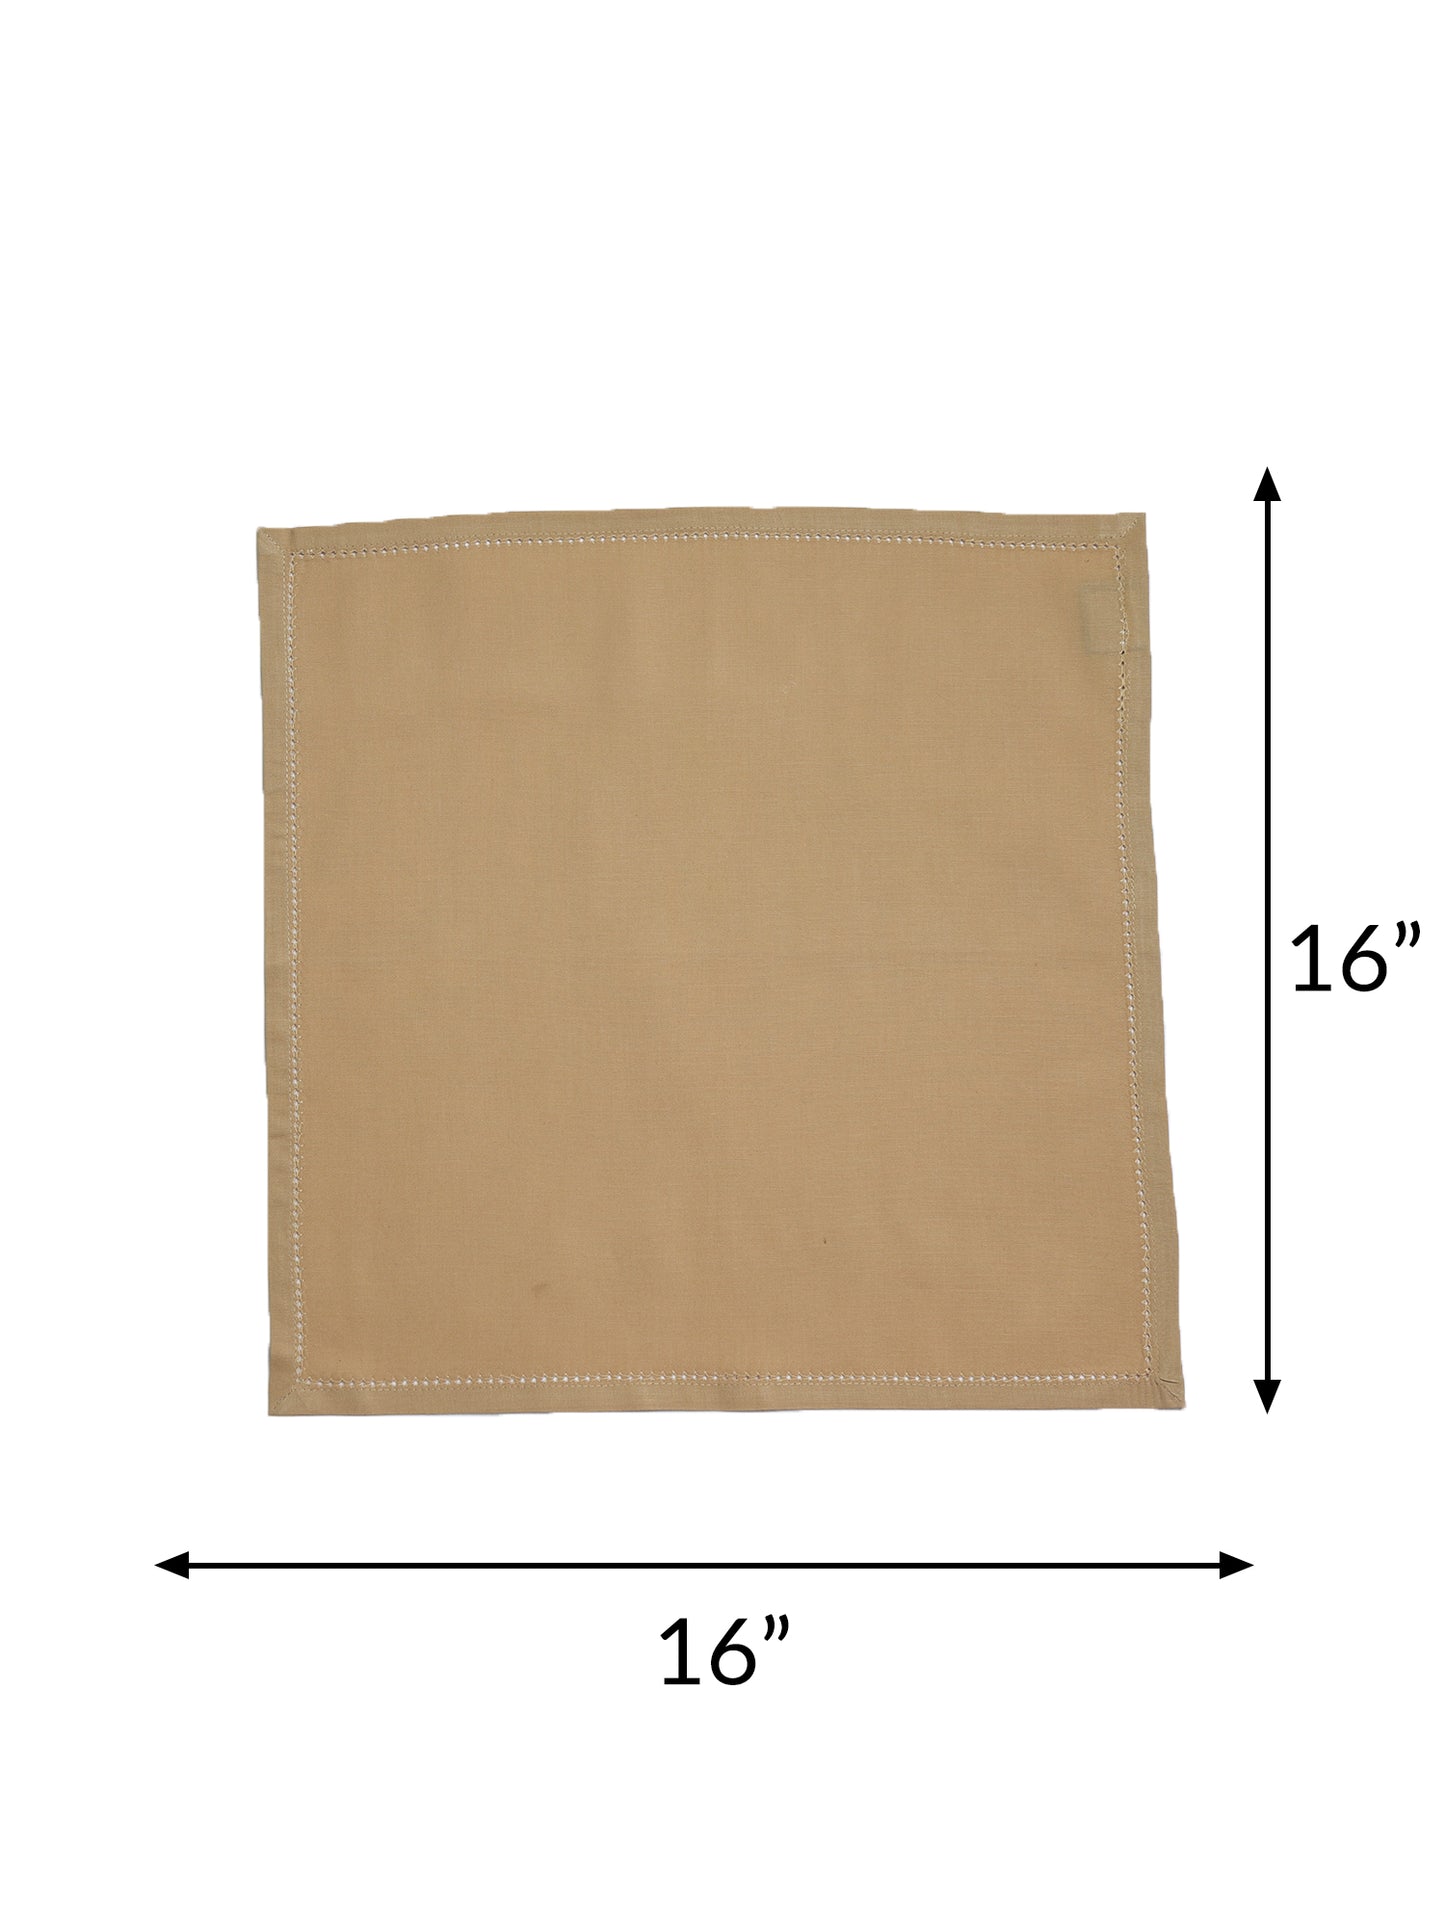 fagotting embroidered set of 6 dinner napkins in beige color - 16x16 inch